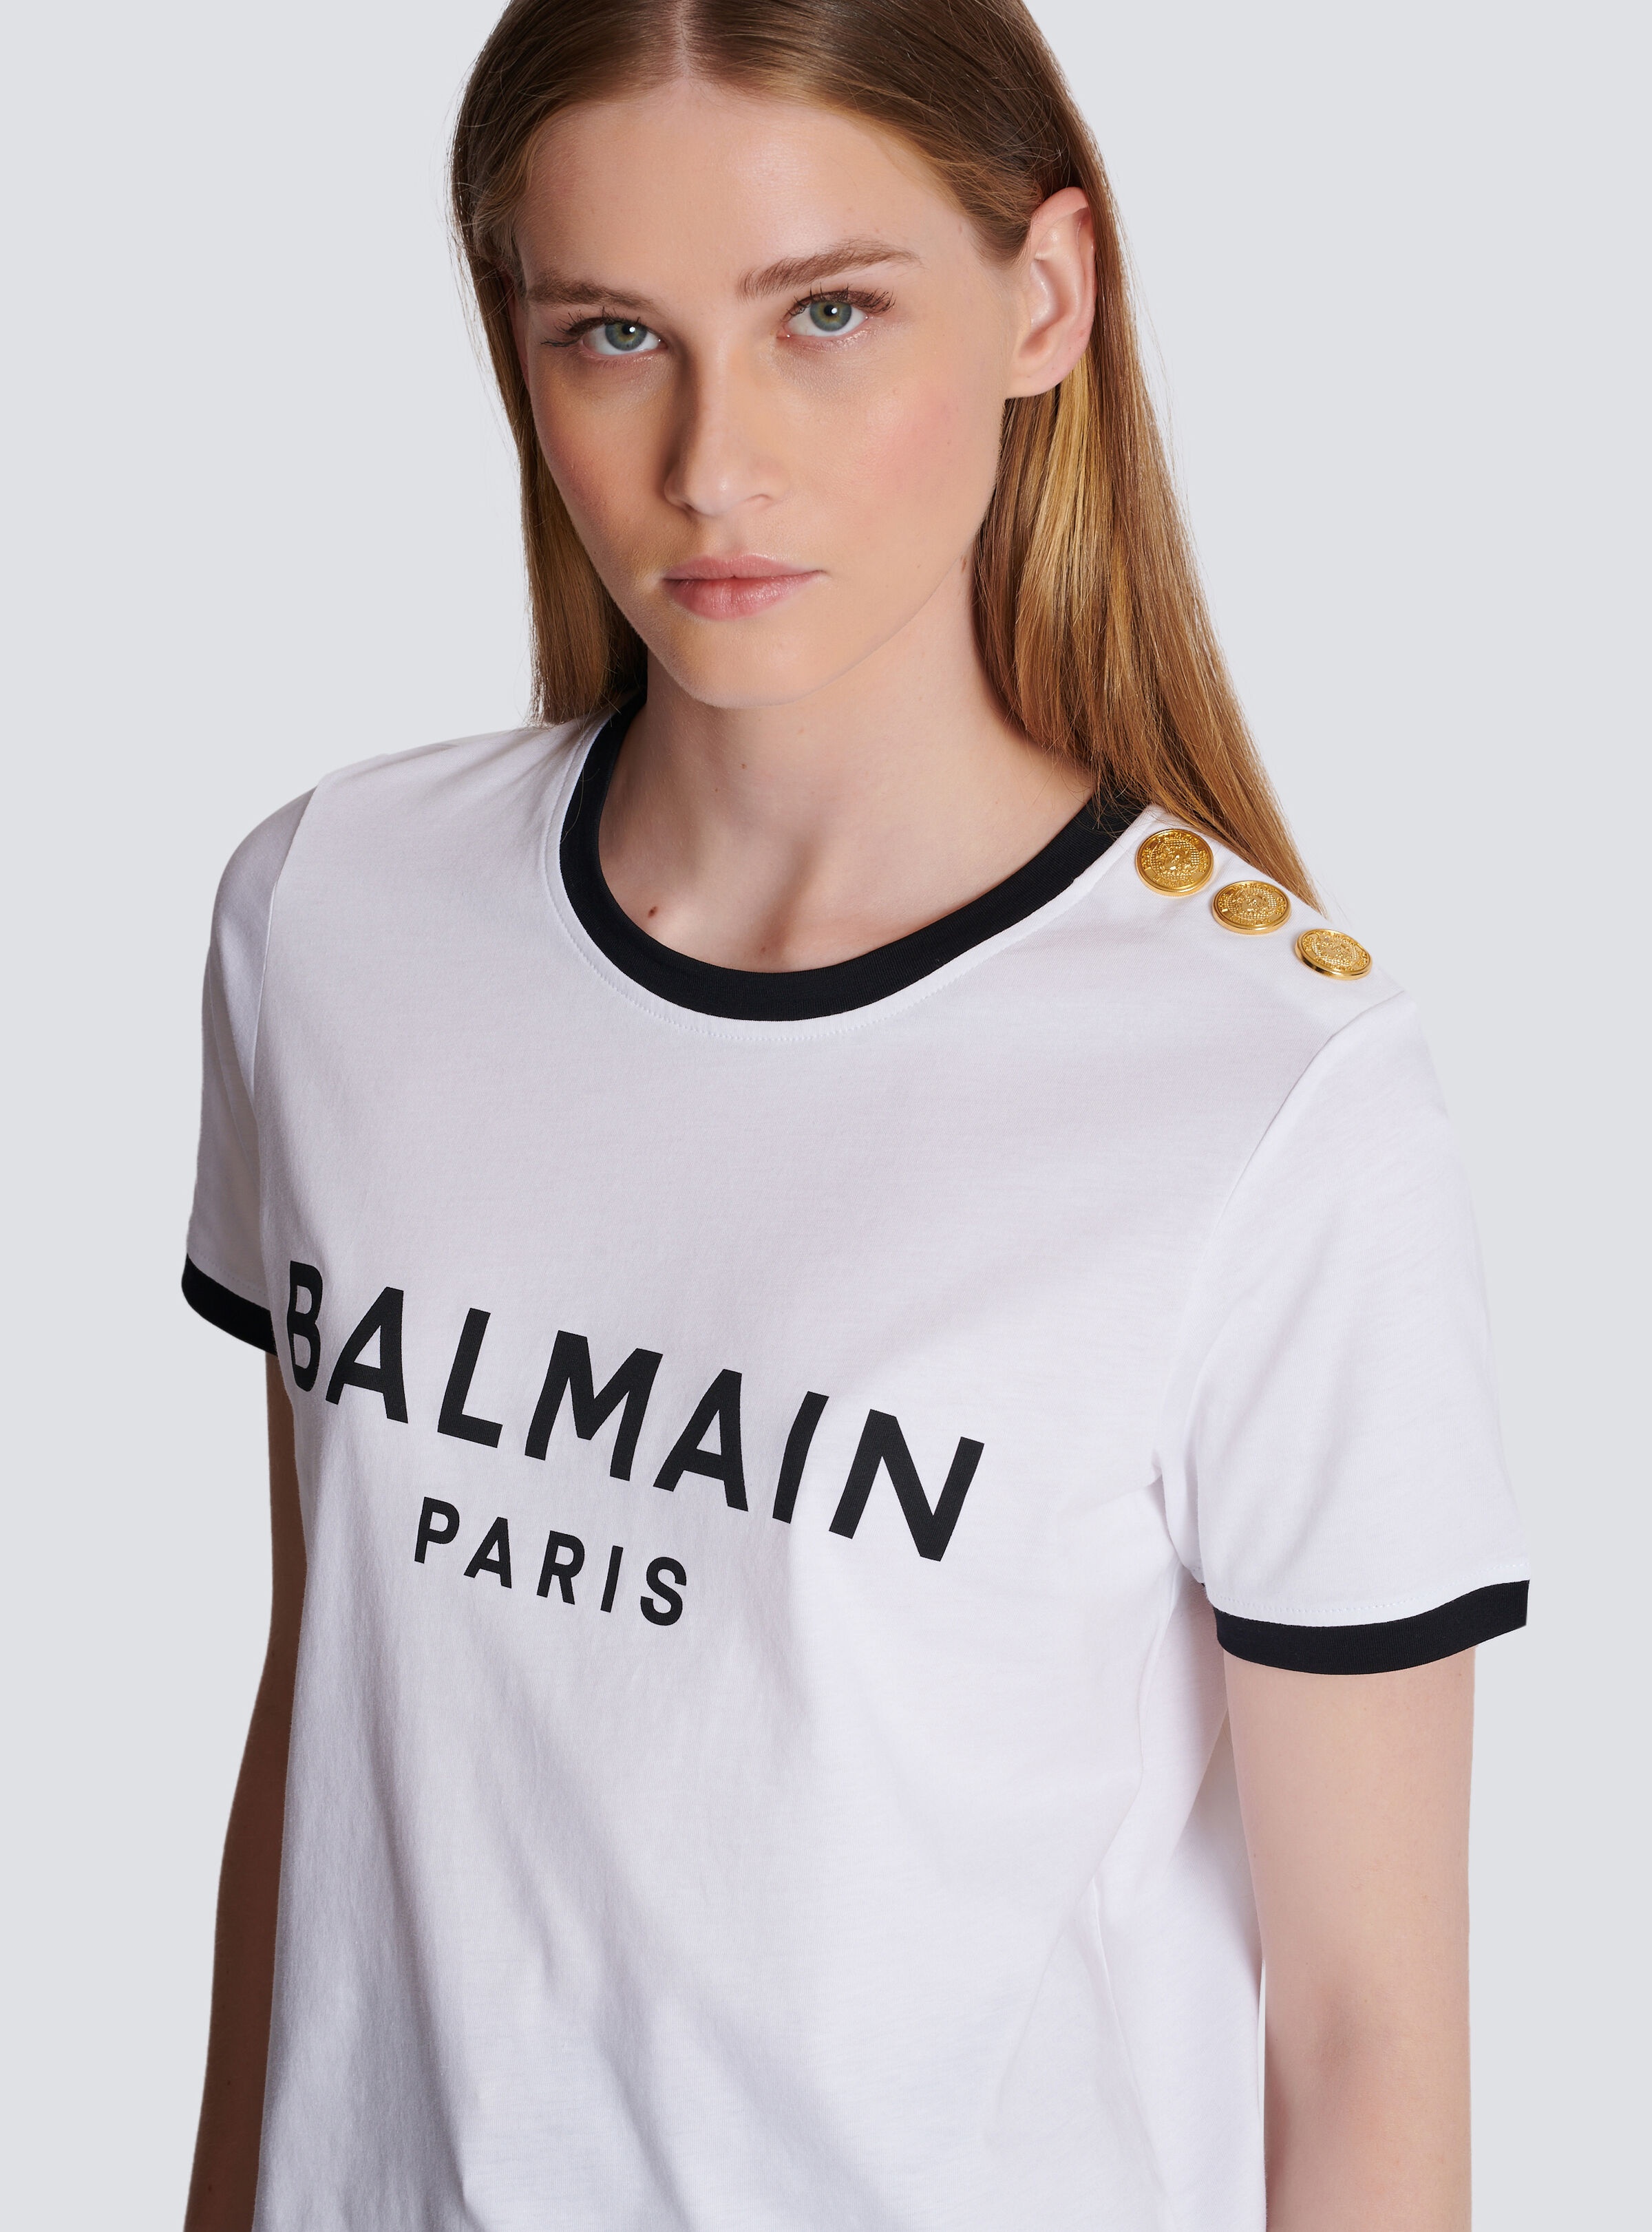 Balmain Paris 3-button T-shirt - 7